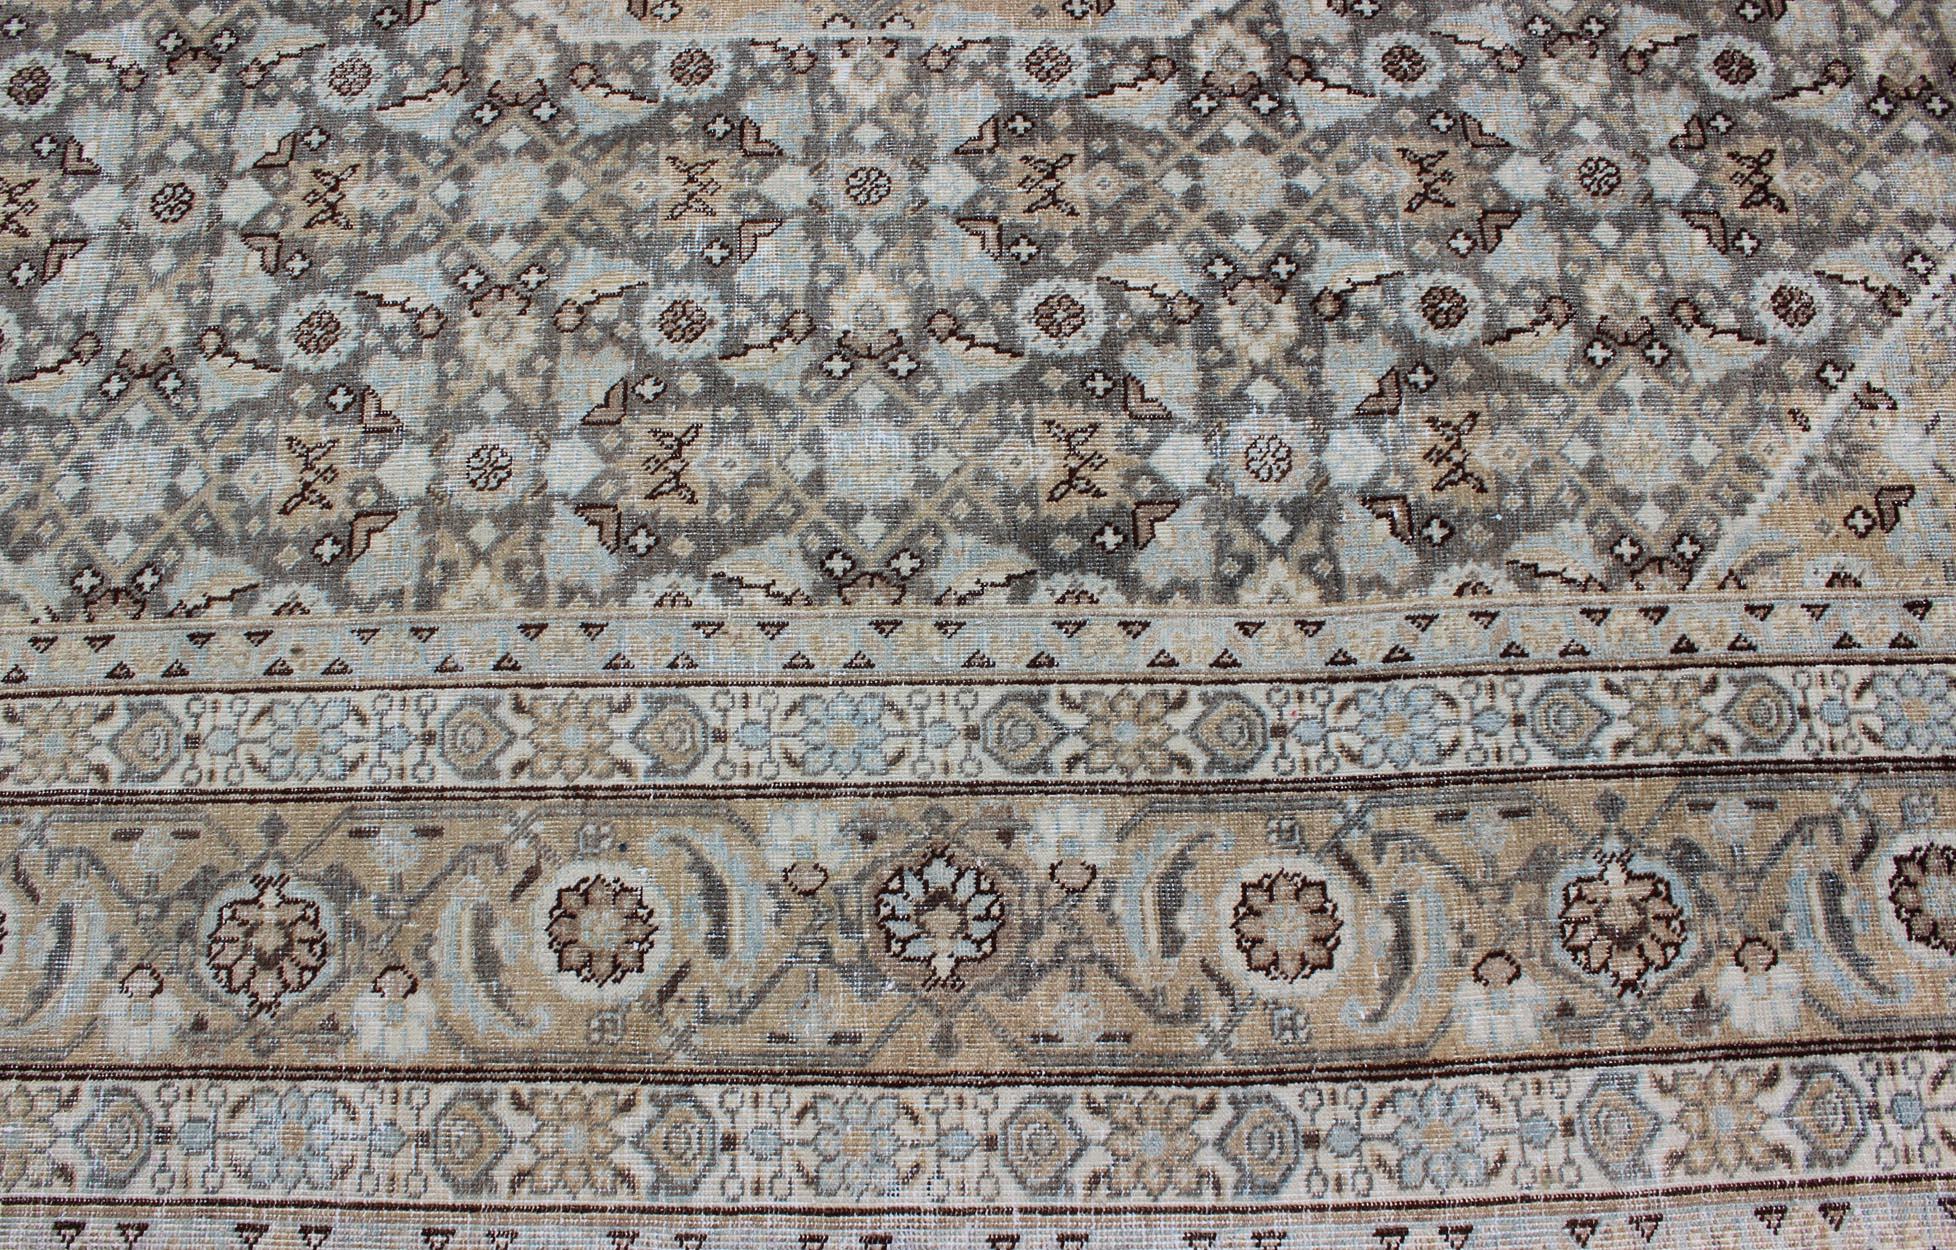 Antique Persian Tabriz Carpet with Geometric Diamond Design in Earth Tones For Sale 4